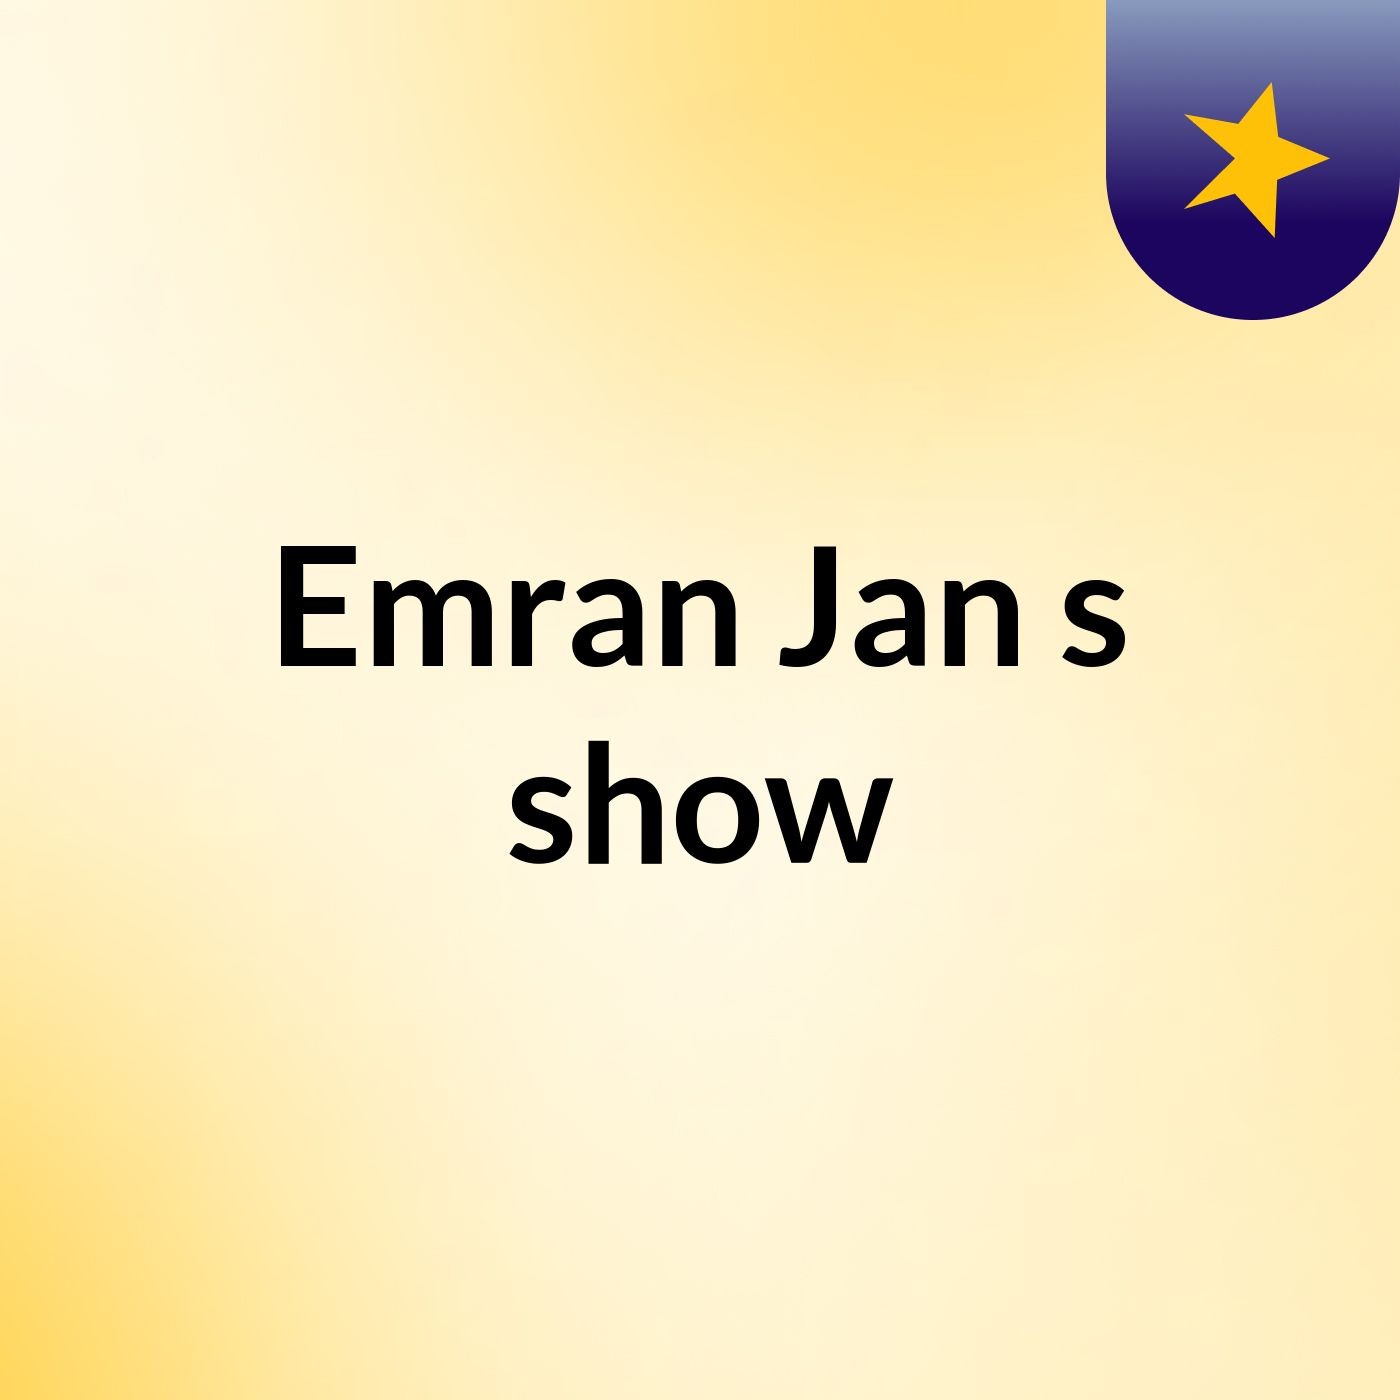 Emran Jan's show